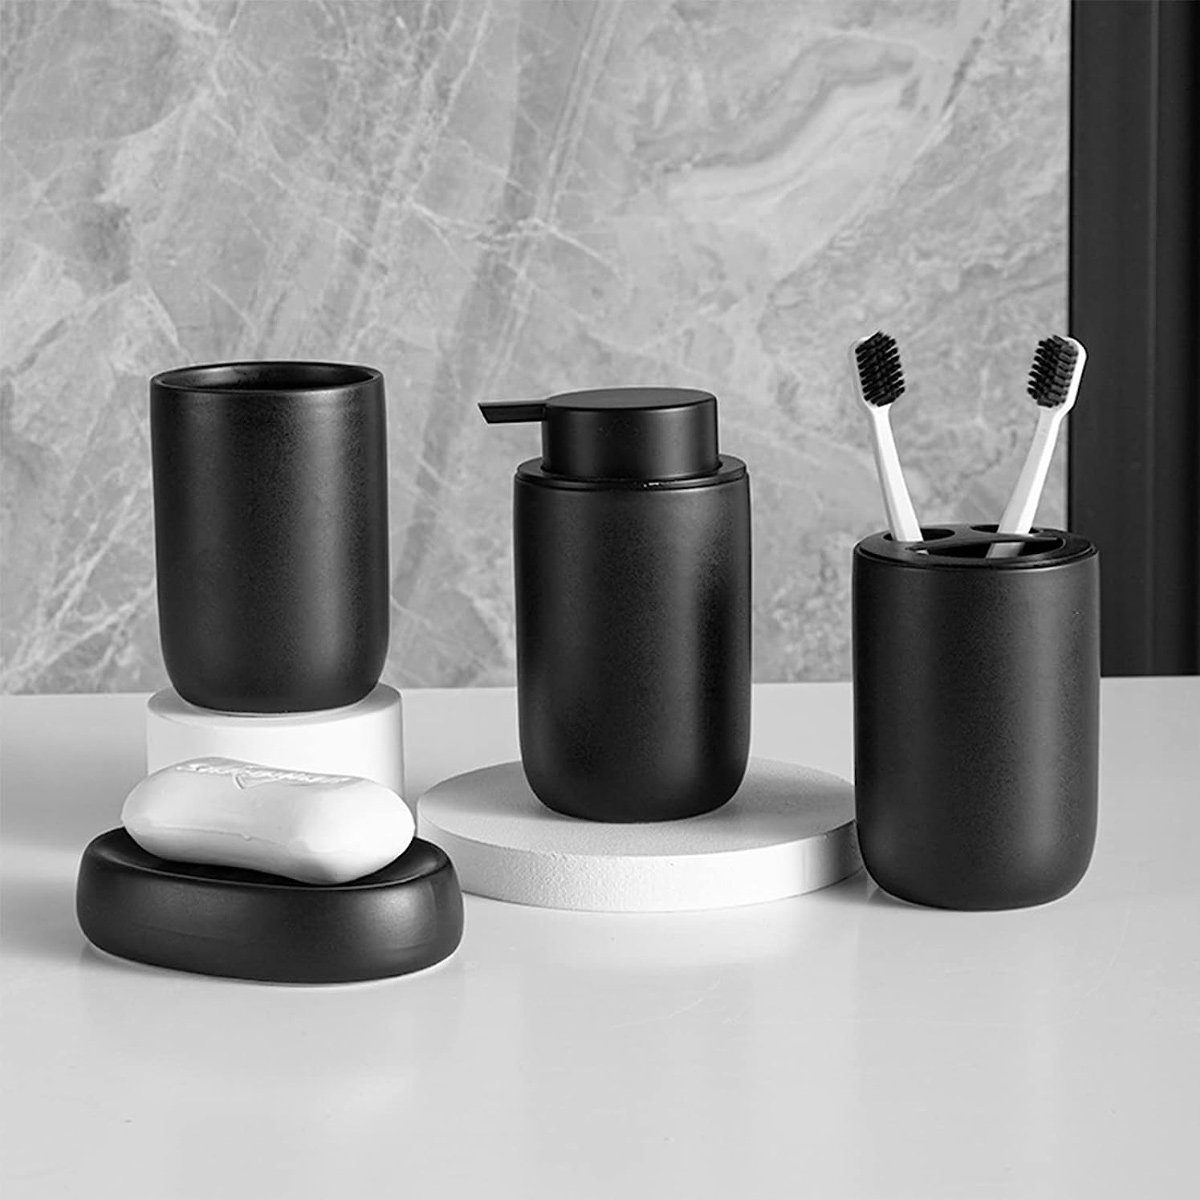 Seifenspender,Soap Keramik,für Handseife,Shampoo,Duschgel Dispenser Jormftte Seifenspender Schwarz